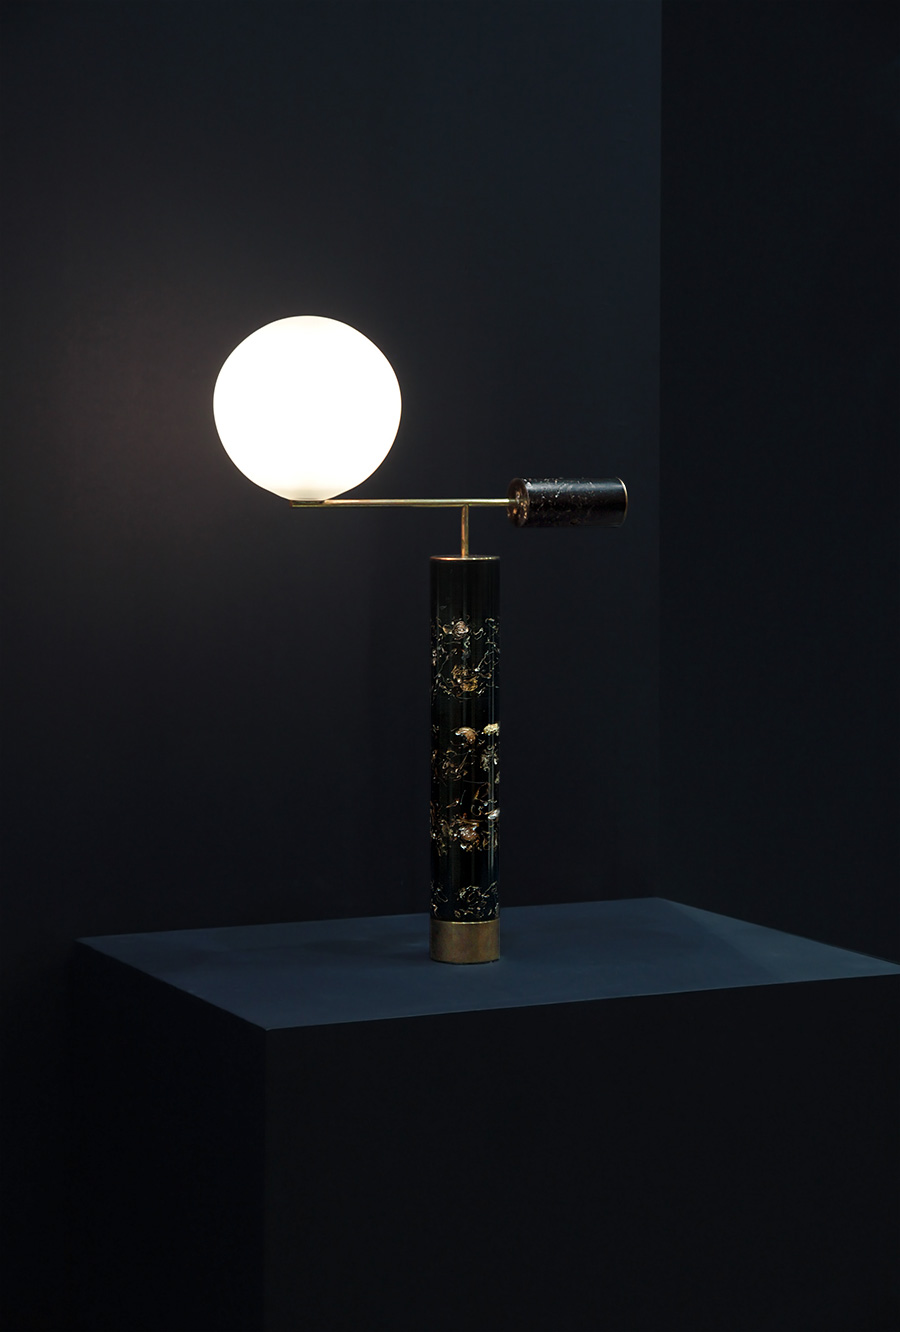 marcin-rusak-flora-collection-04-lamp